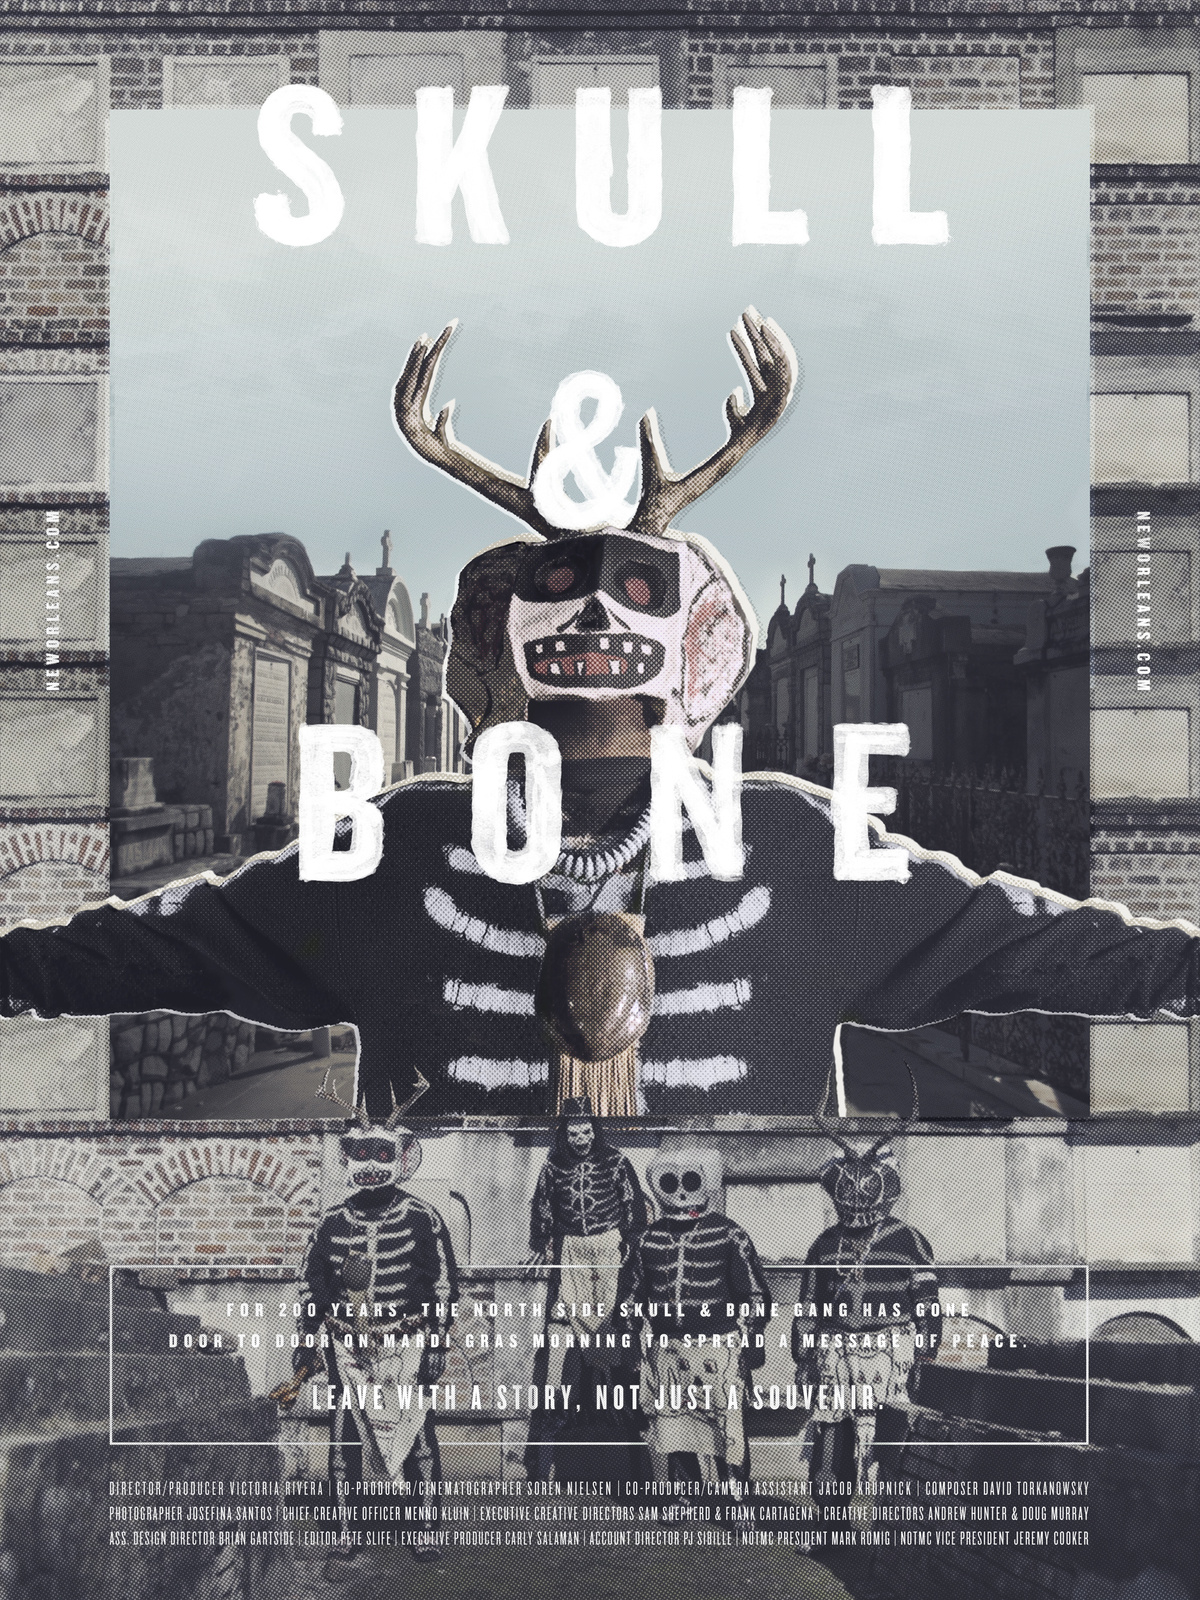 The North Side Skull & Bone Gang